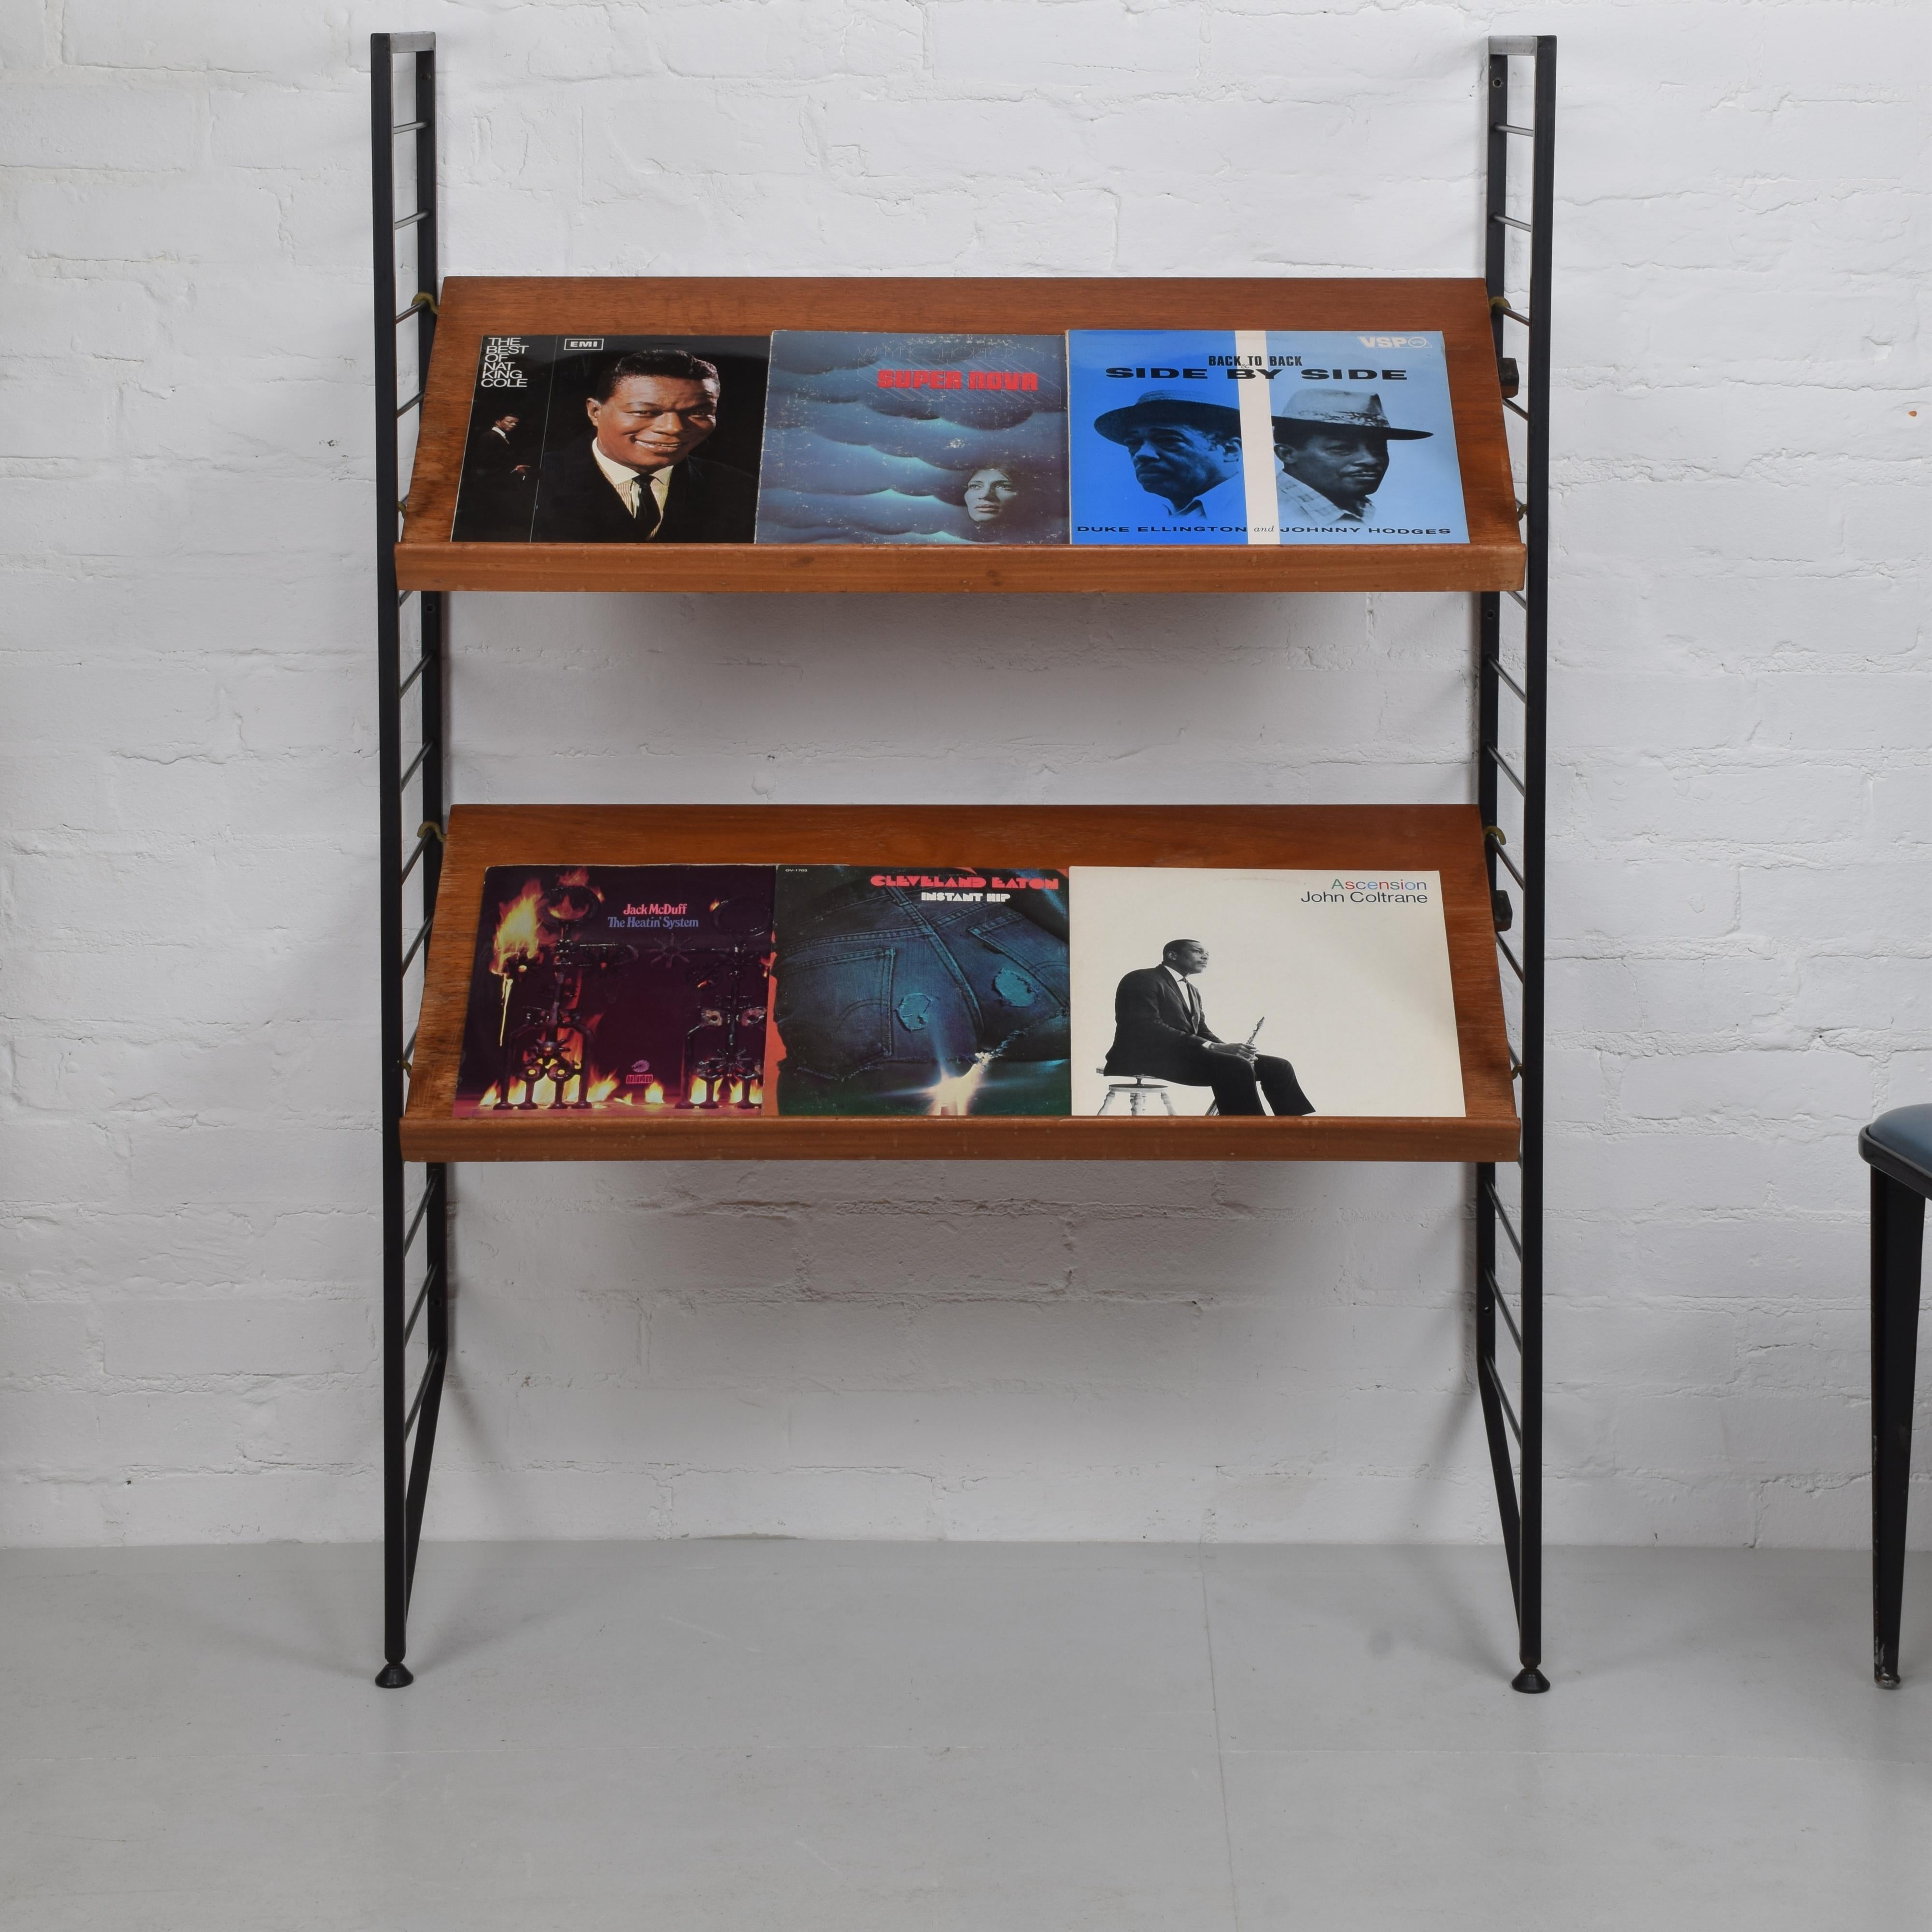 British Staples Ladderax Shelving Unit, Display Shelves for Books, Magazines, Records